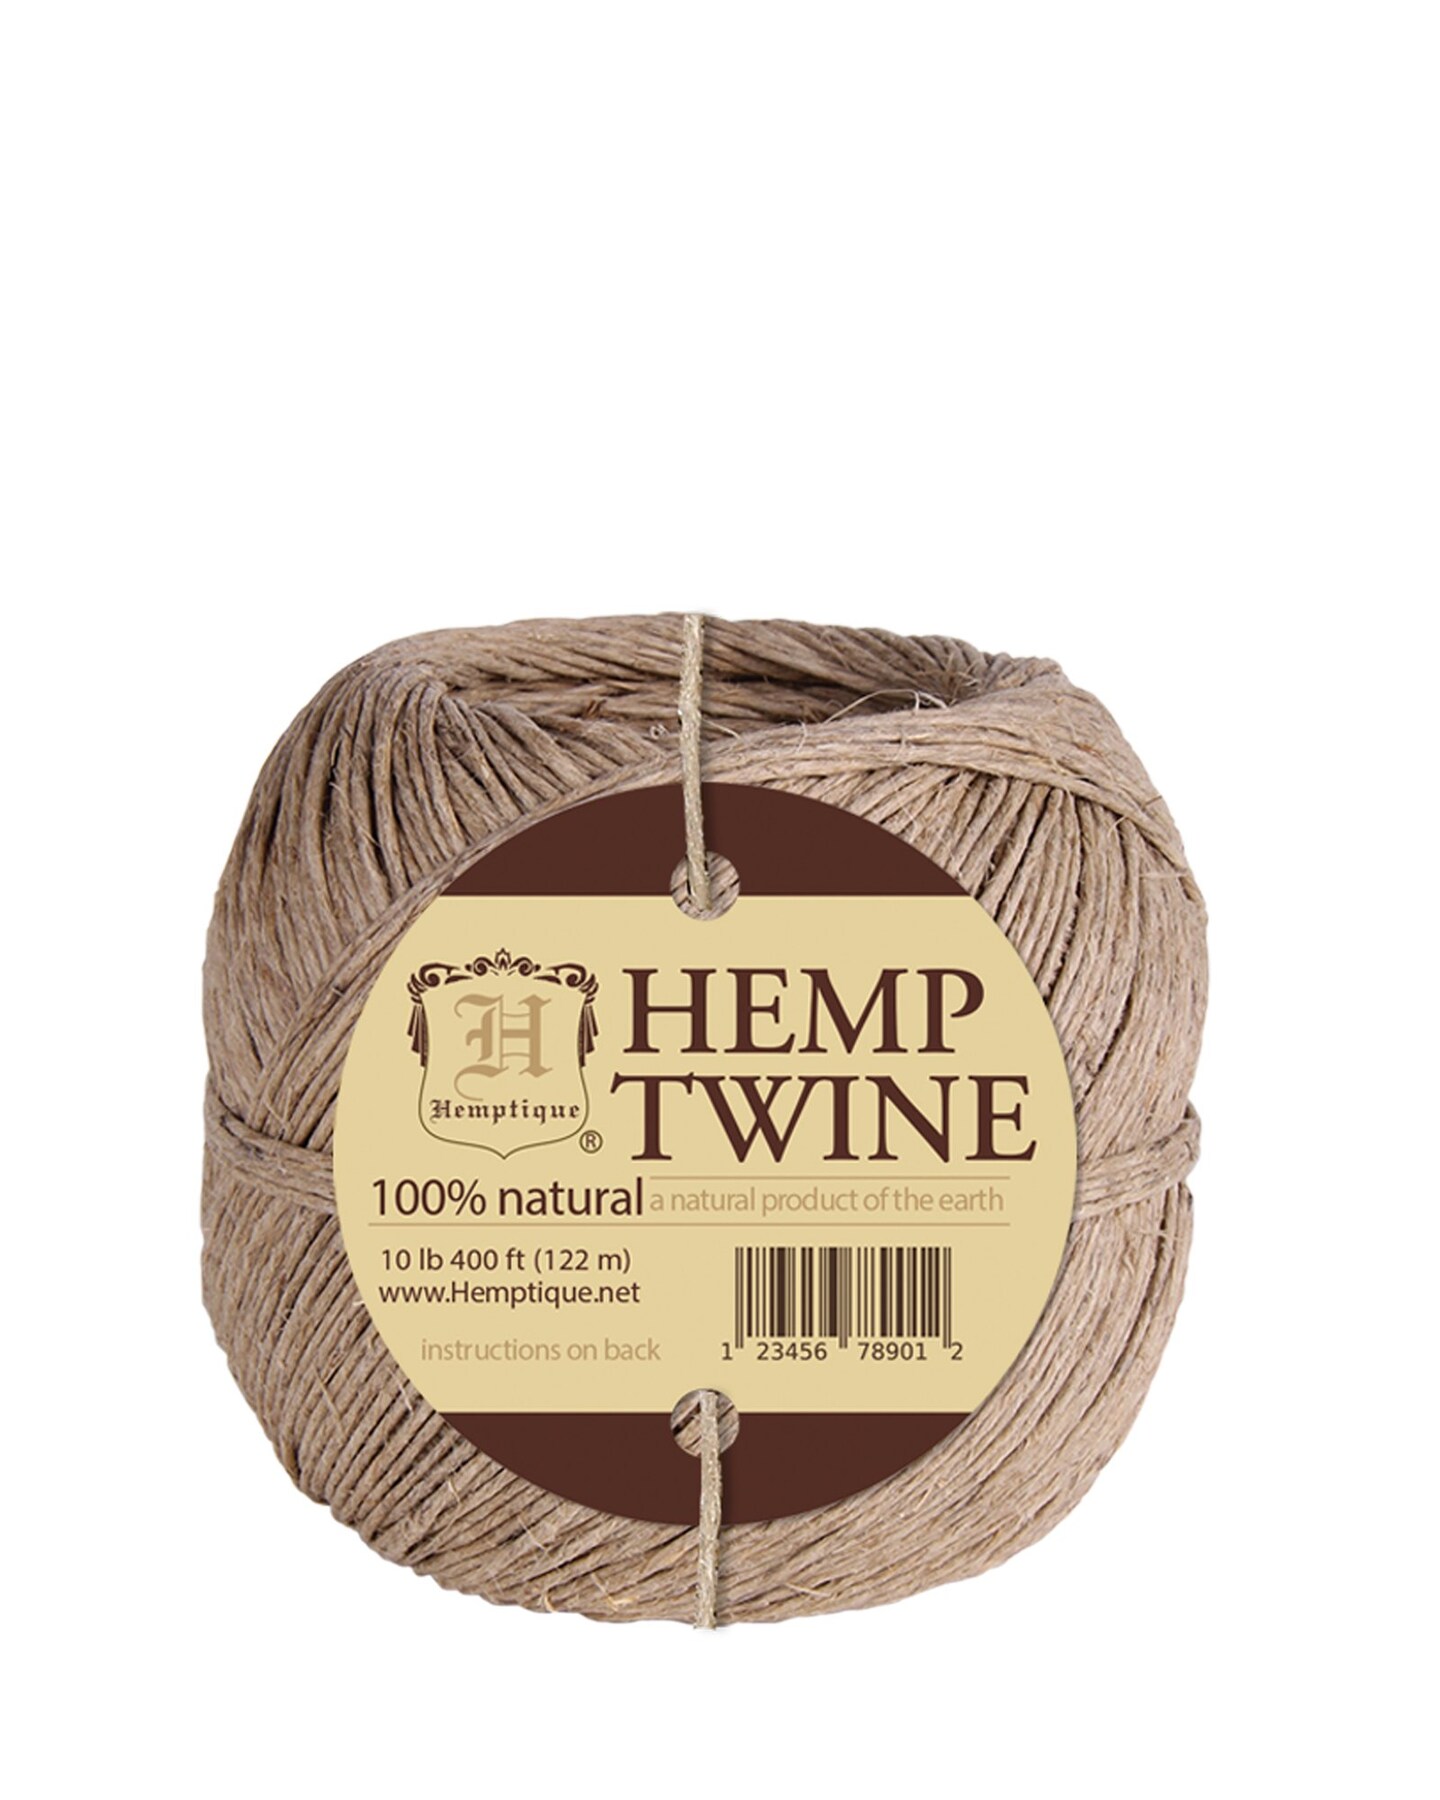 Hemptique Hemp Twine Ball Eco Friendly Sustainable Naturally Grown